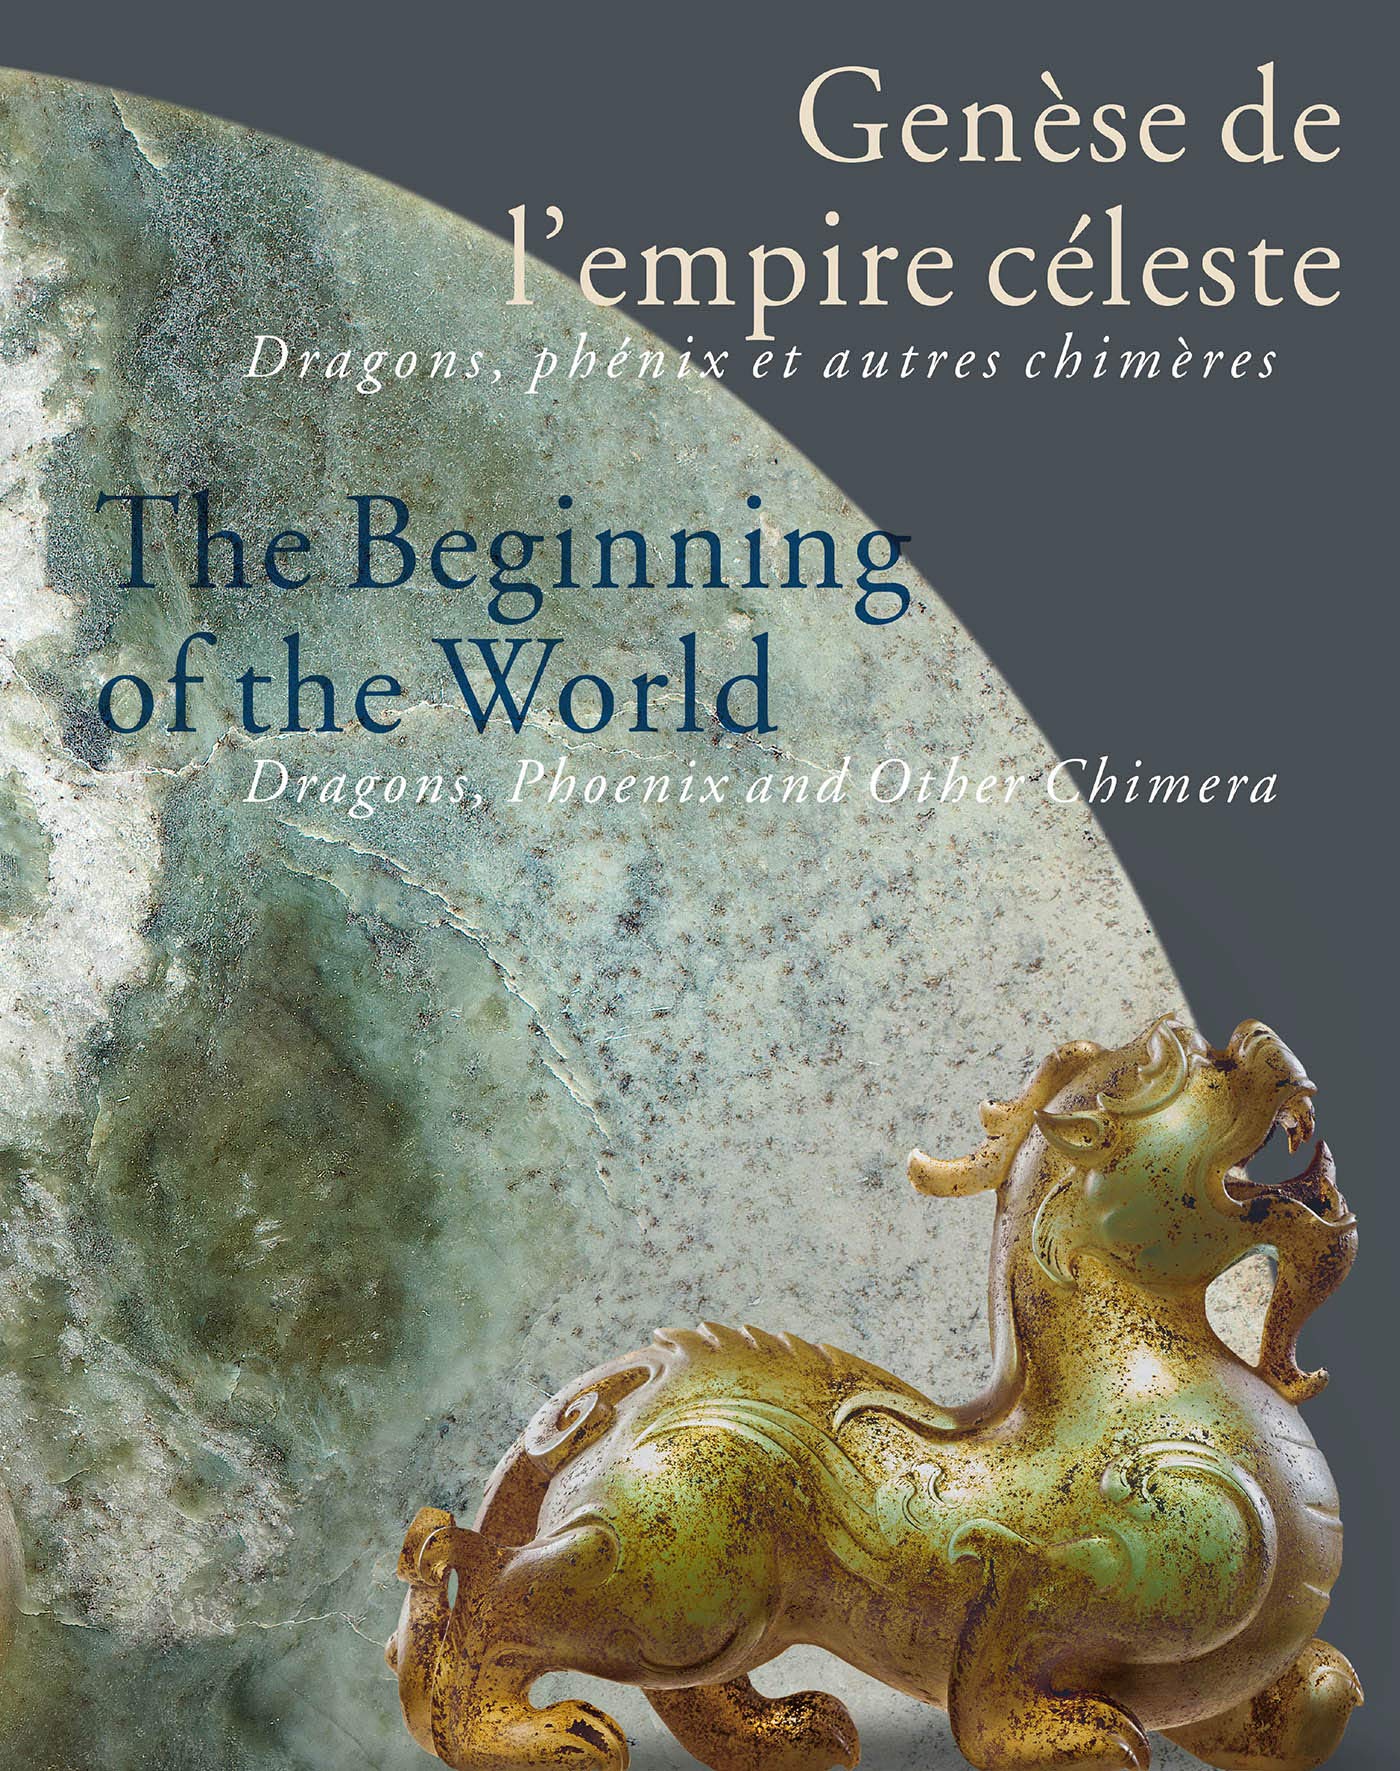 Genèse de l'empire céleste. Dragons, phénix et autres chimères / The beginning of the world. Dragons, Phoenix and Other Chimera, 2020, 296 p., 250 ill.